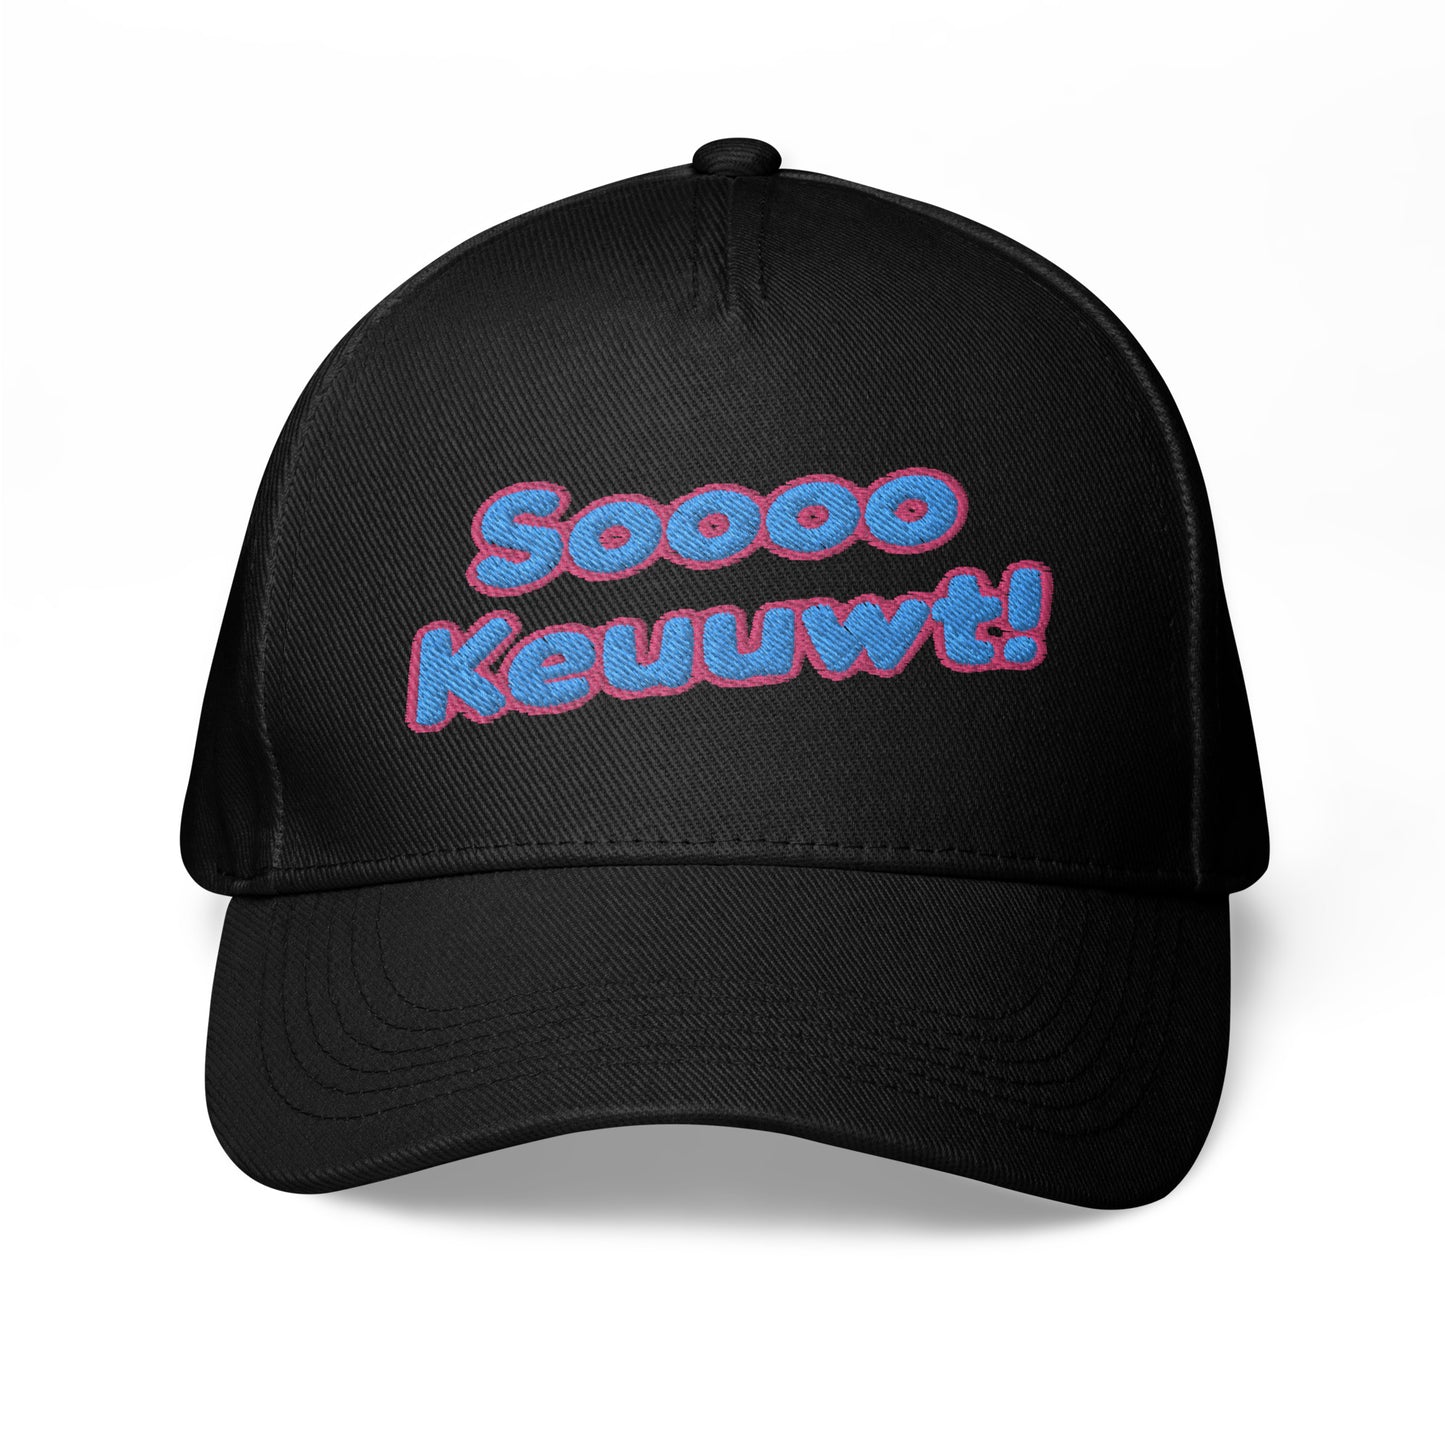 "Soooo Keuuwt!" Classic baseball cap